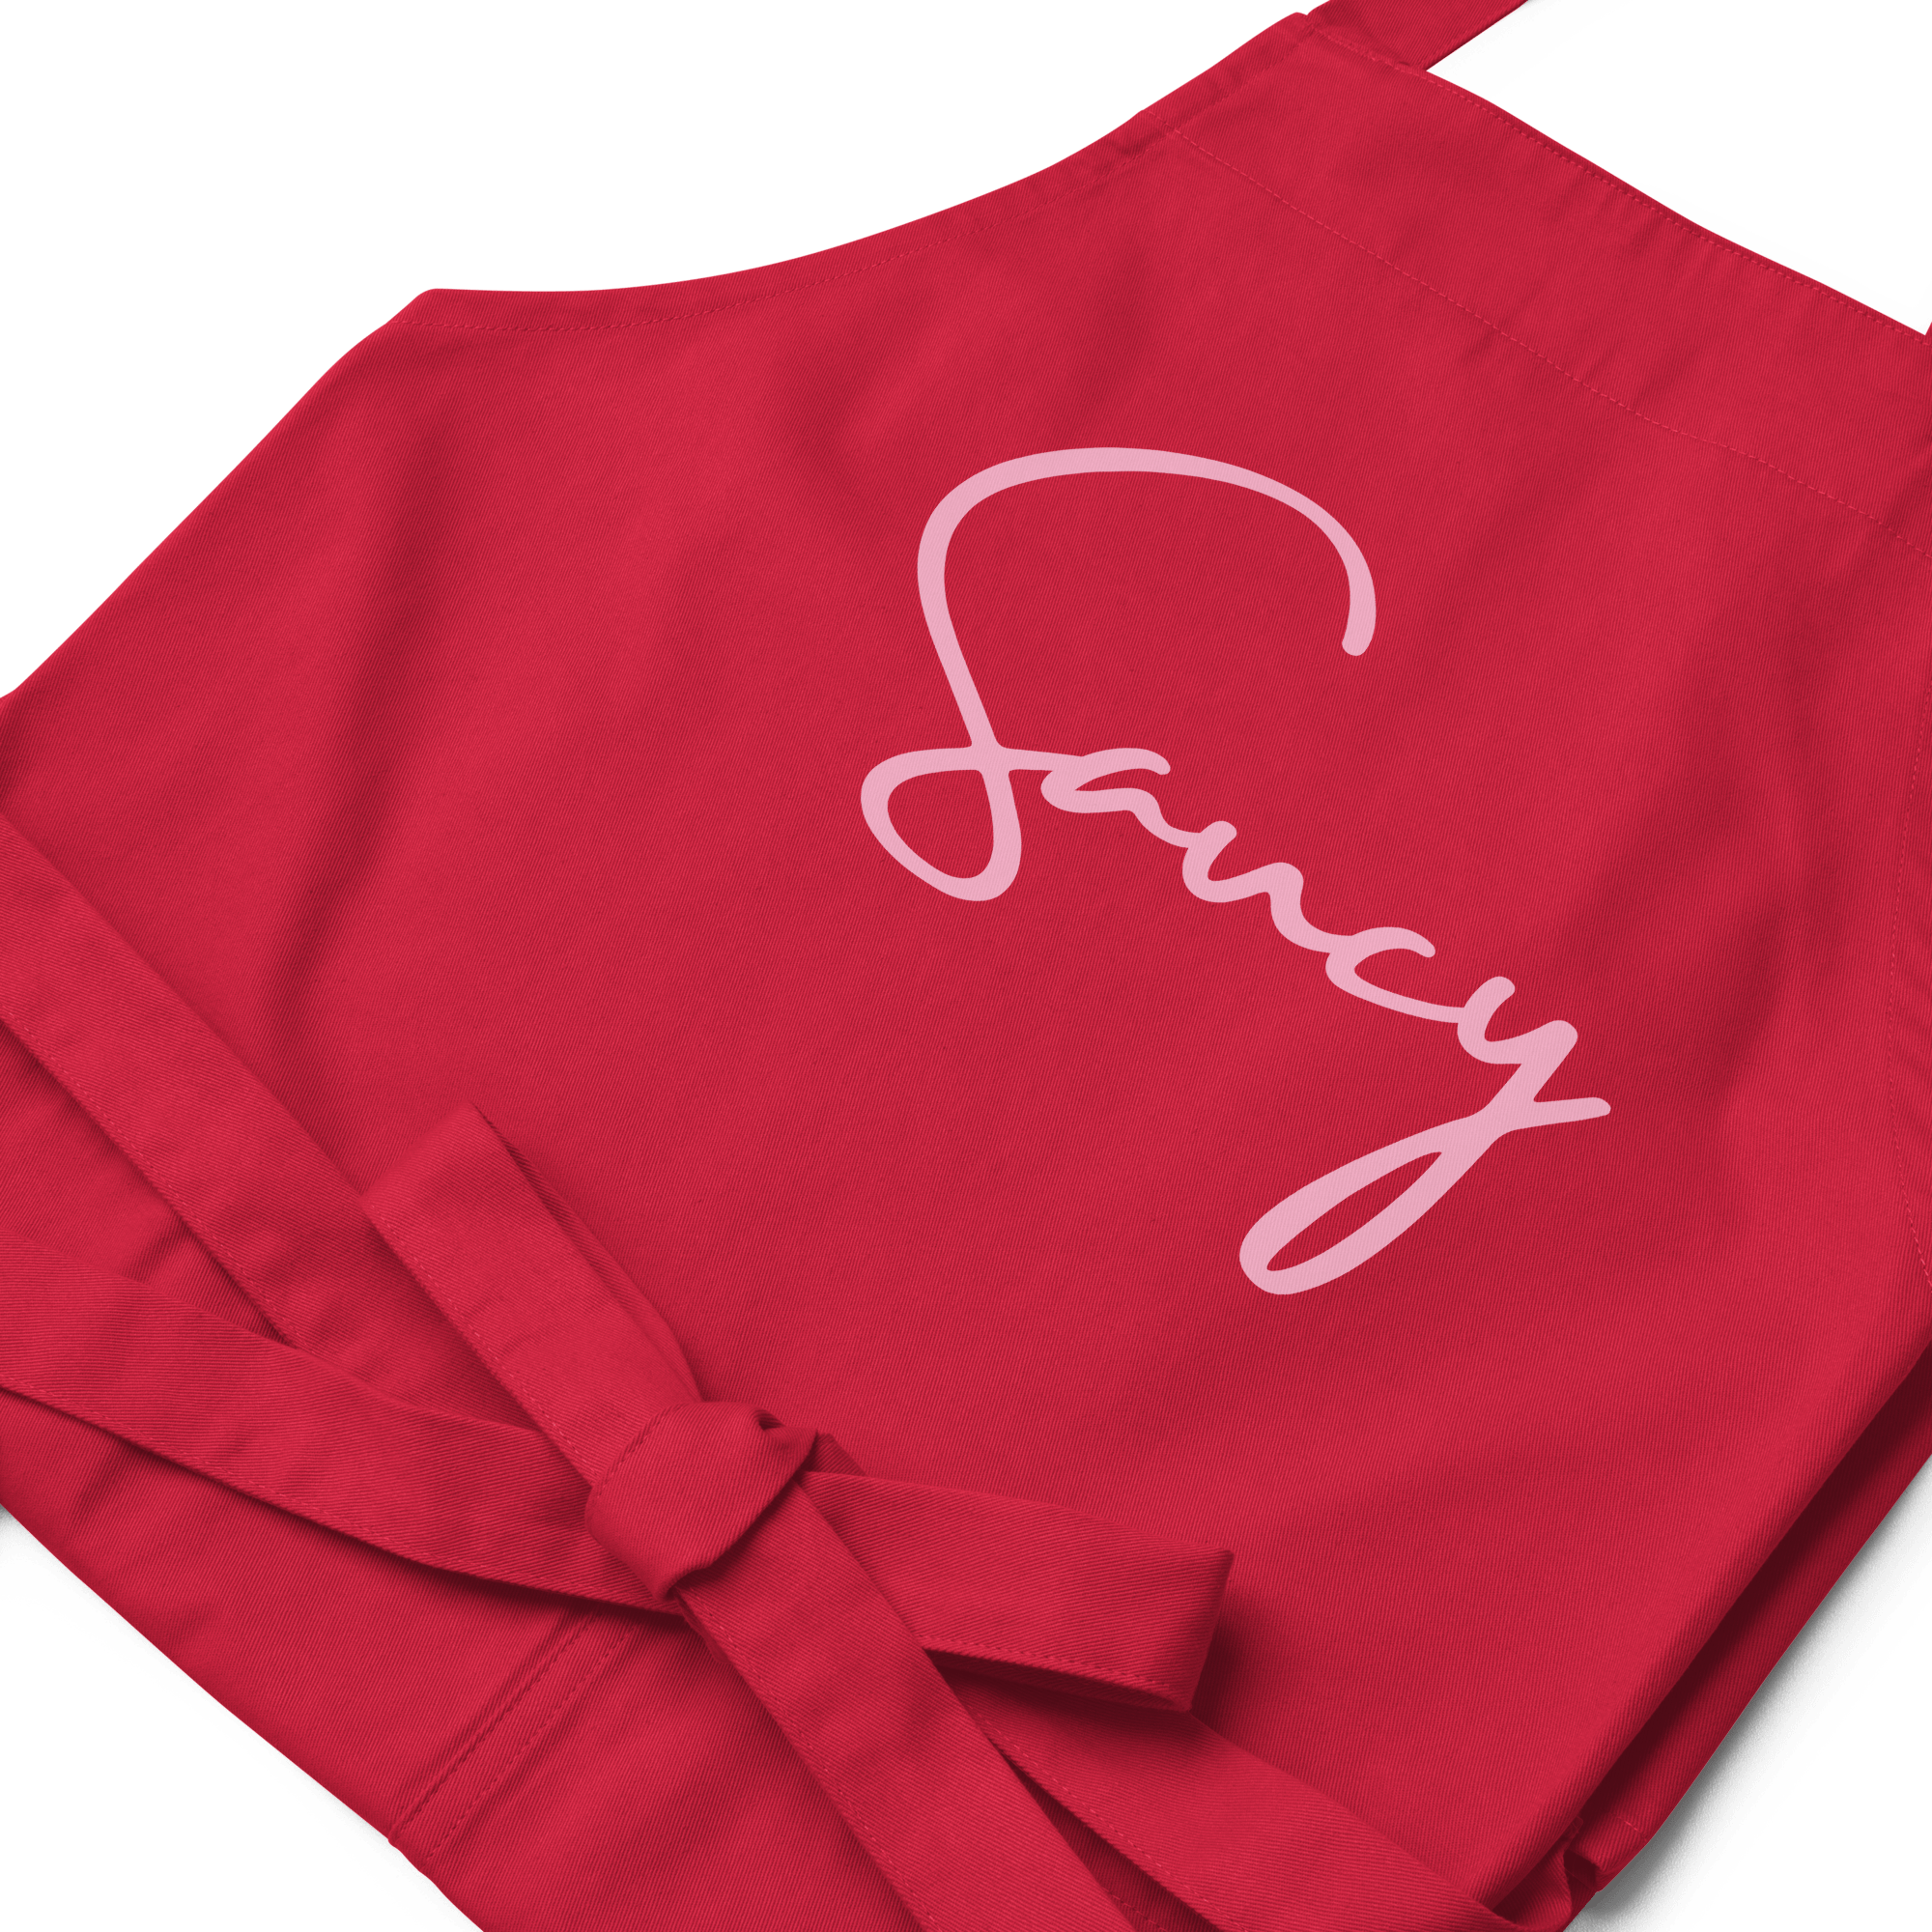 Saucy Apron | Organic Cotton Aprons Jolly & Goode